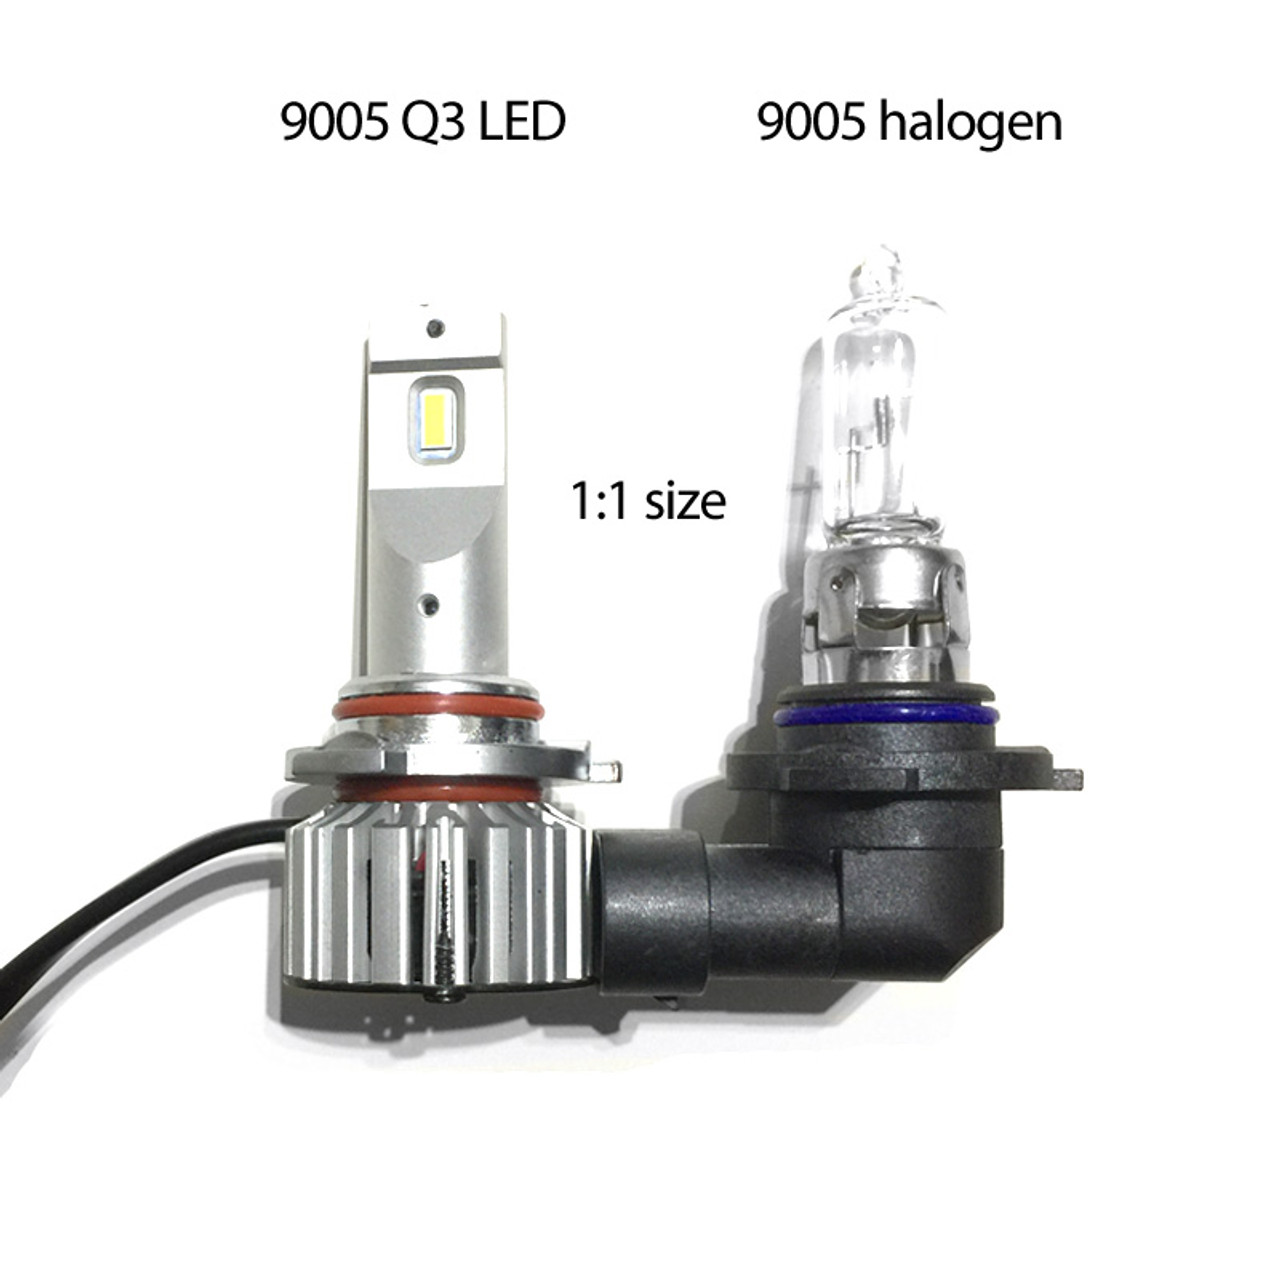 Kit Ampoules LED HB3 à Quartz 360° CANBUS